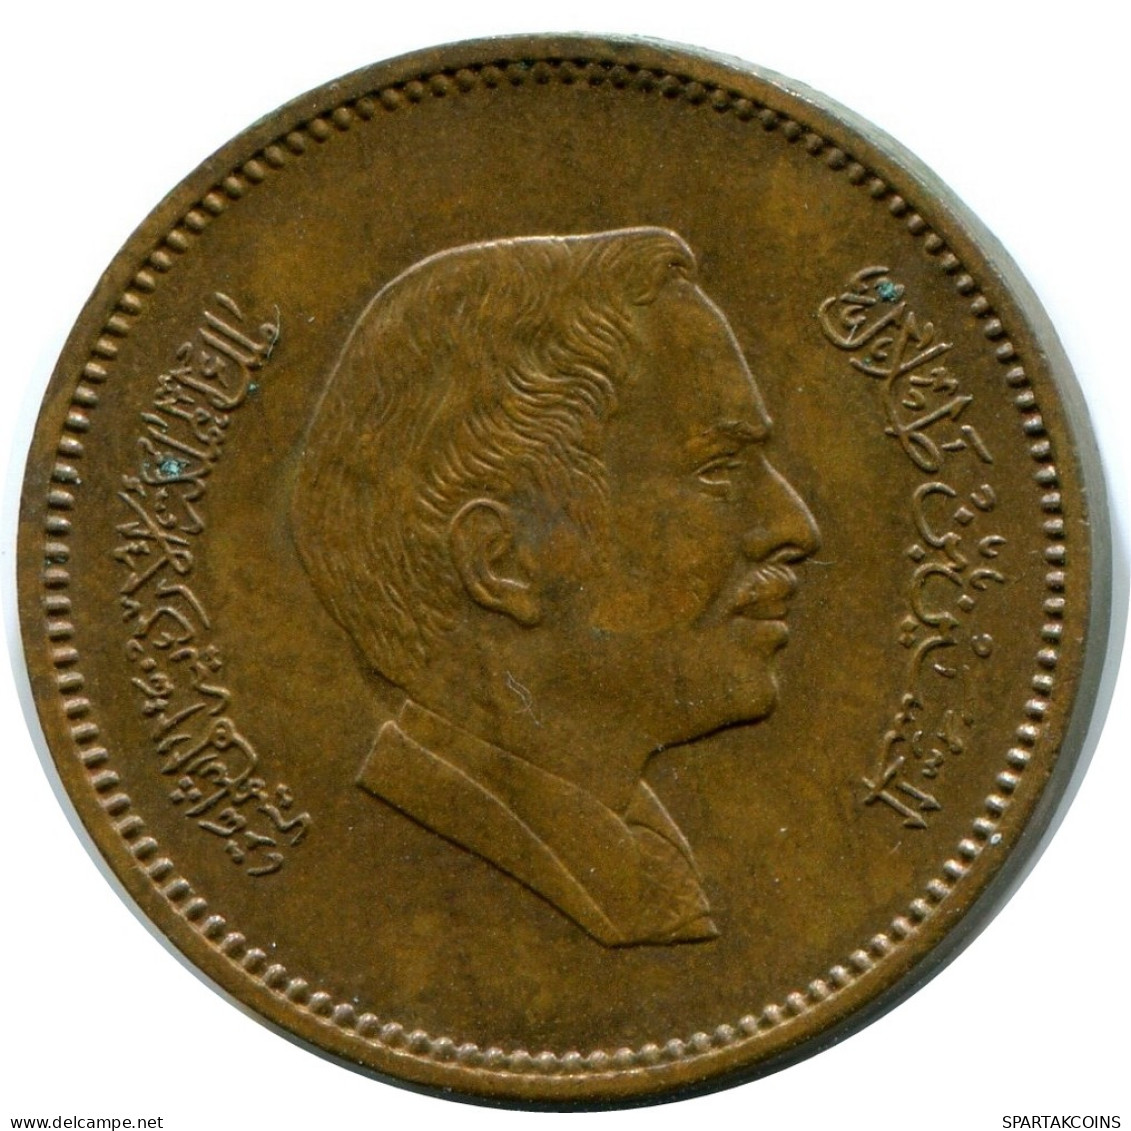 1/2 QIRSH 5 FILS 1978 JORDAN Islamic Coin #AW798.U - Jordanie